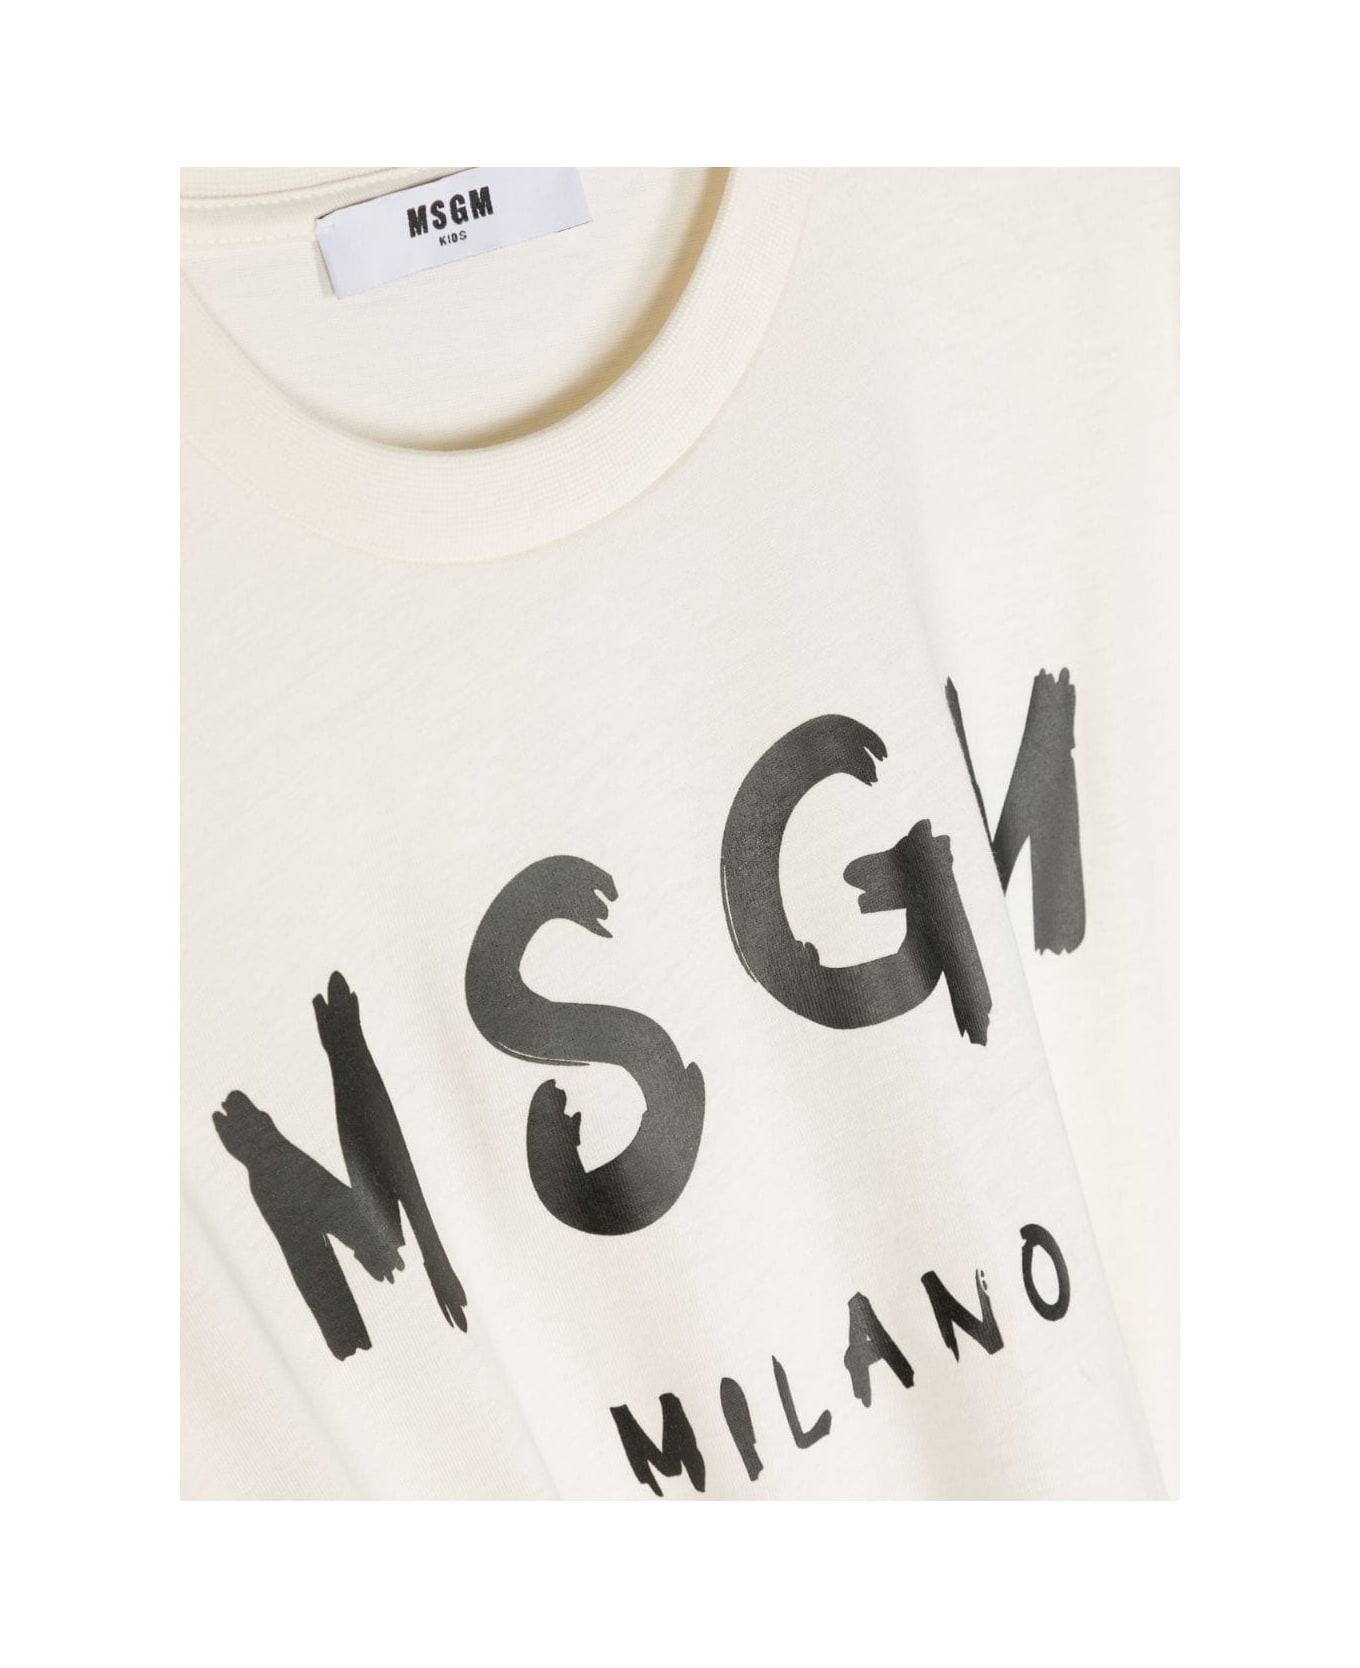 MSGM Cream T-shirt With Brushed Logo - Crema